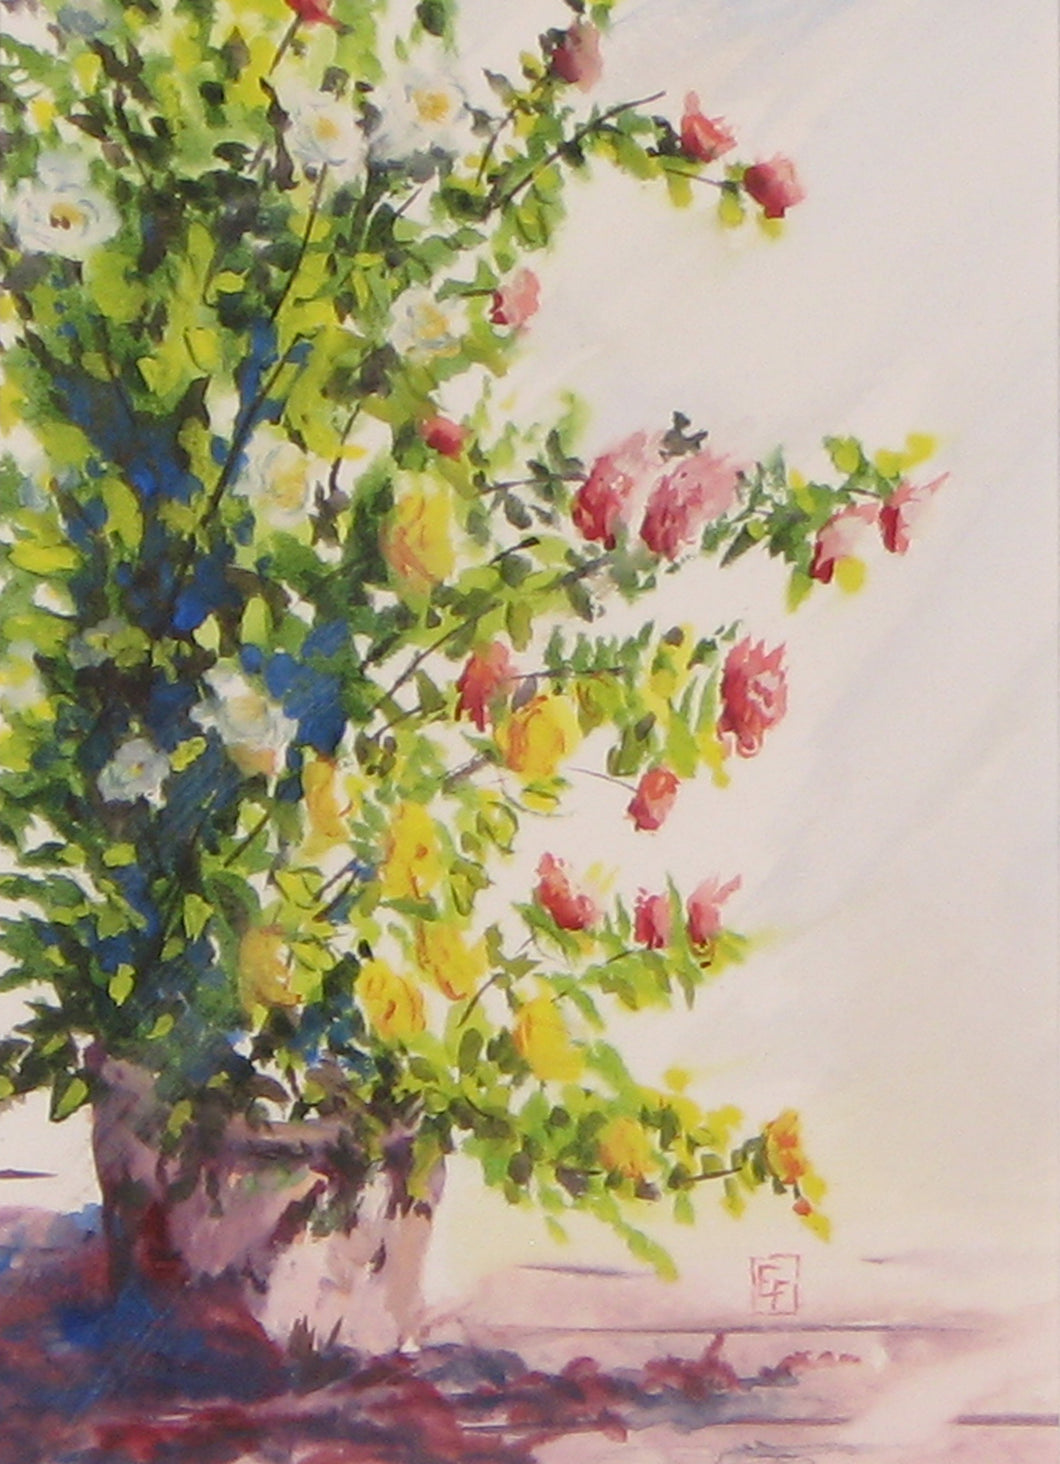 Roses in the Light, Framed Original Watercolor